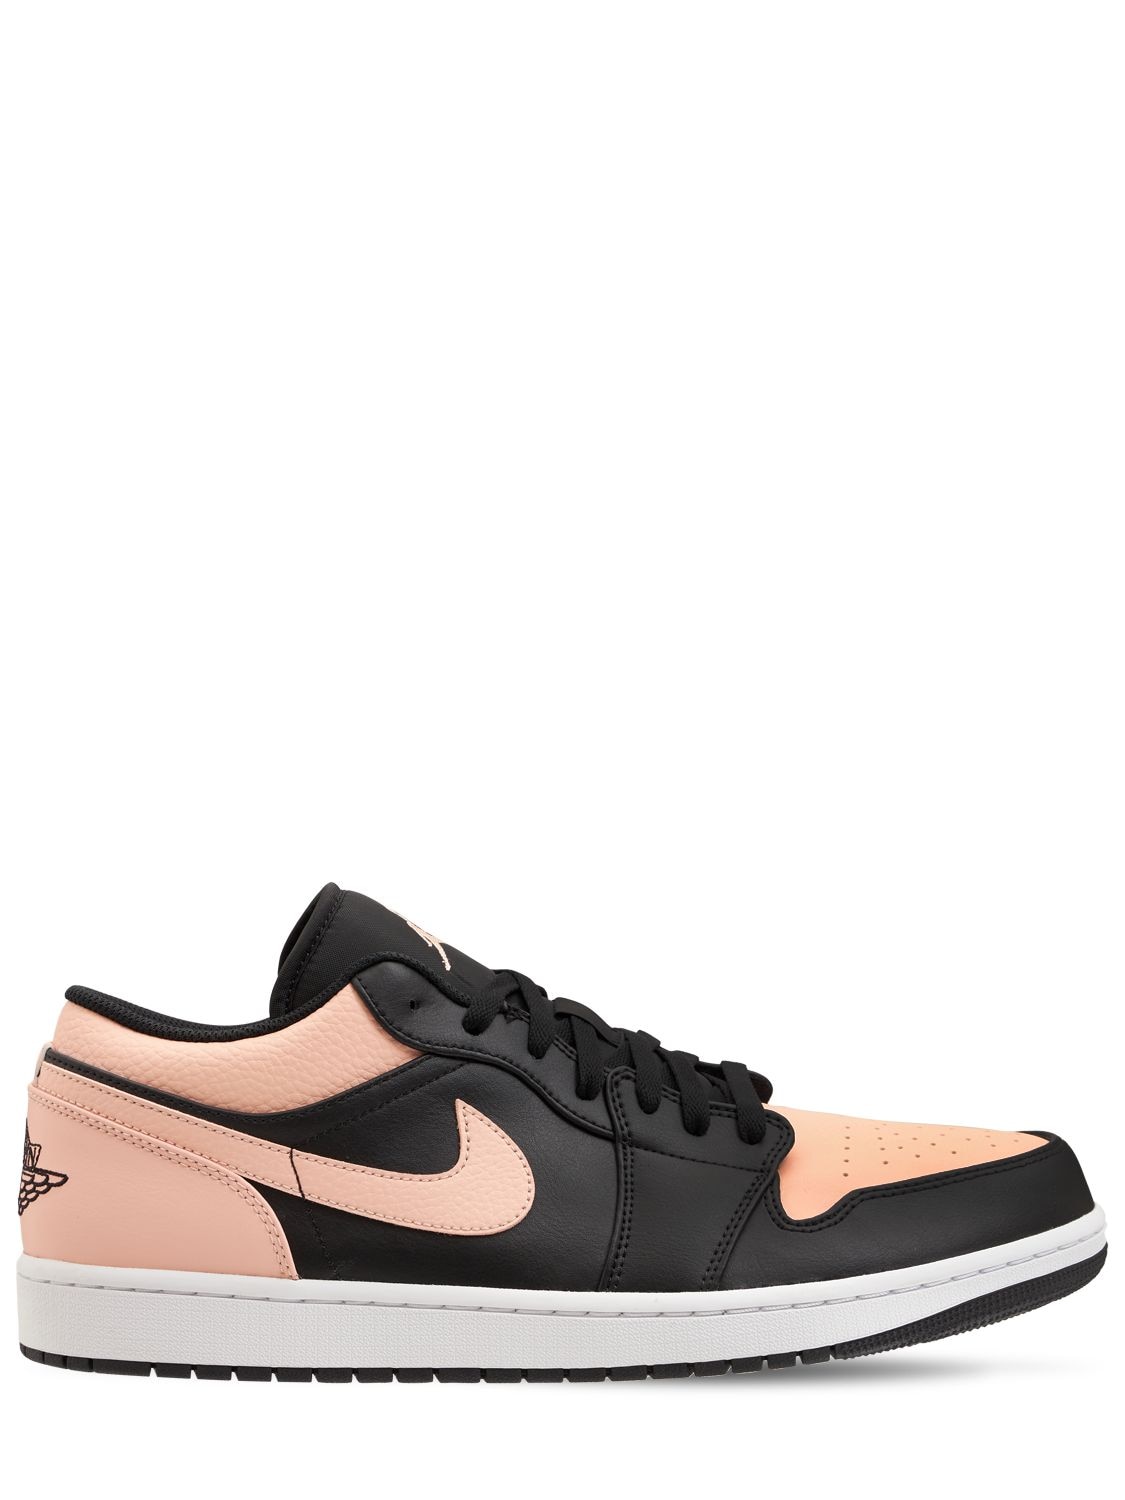 Nike Air Jordan 1 Low Sneakers In Black,pink